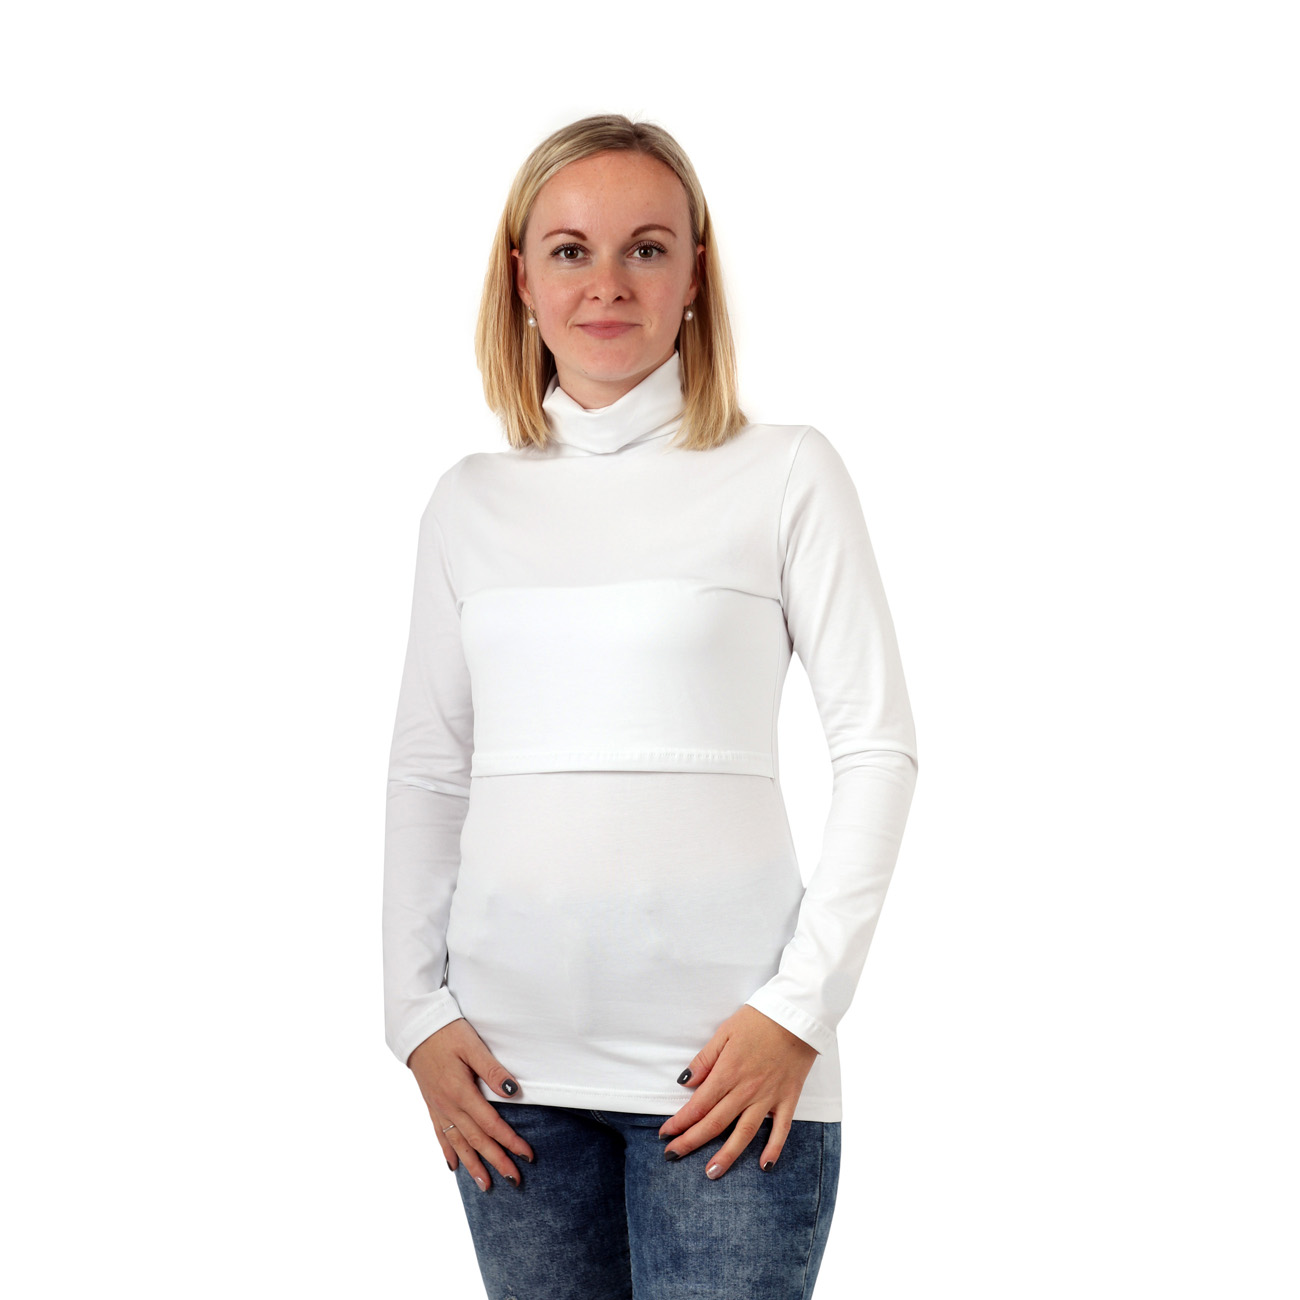 Breast-feeding roll-colar T-shirt Katerina, white S/M